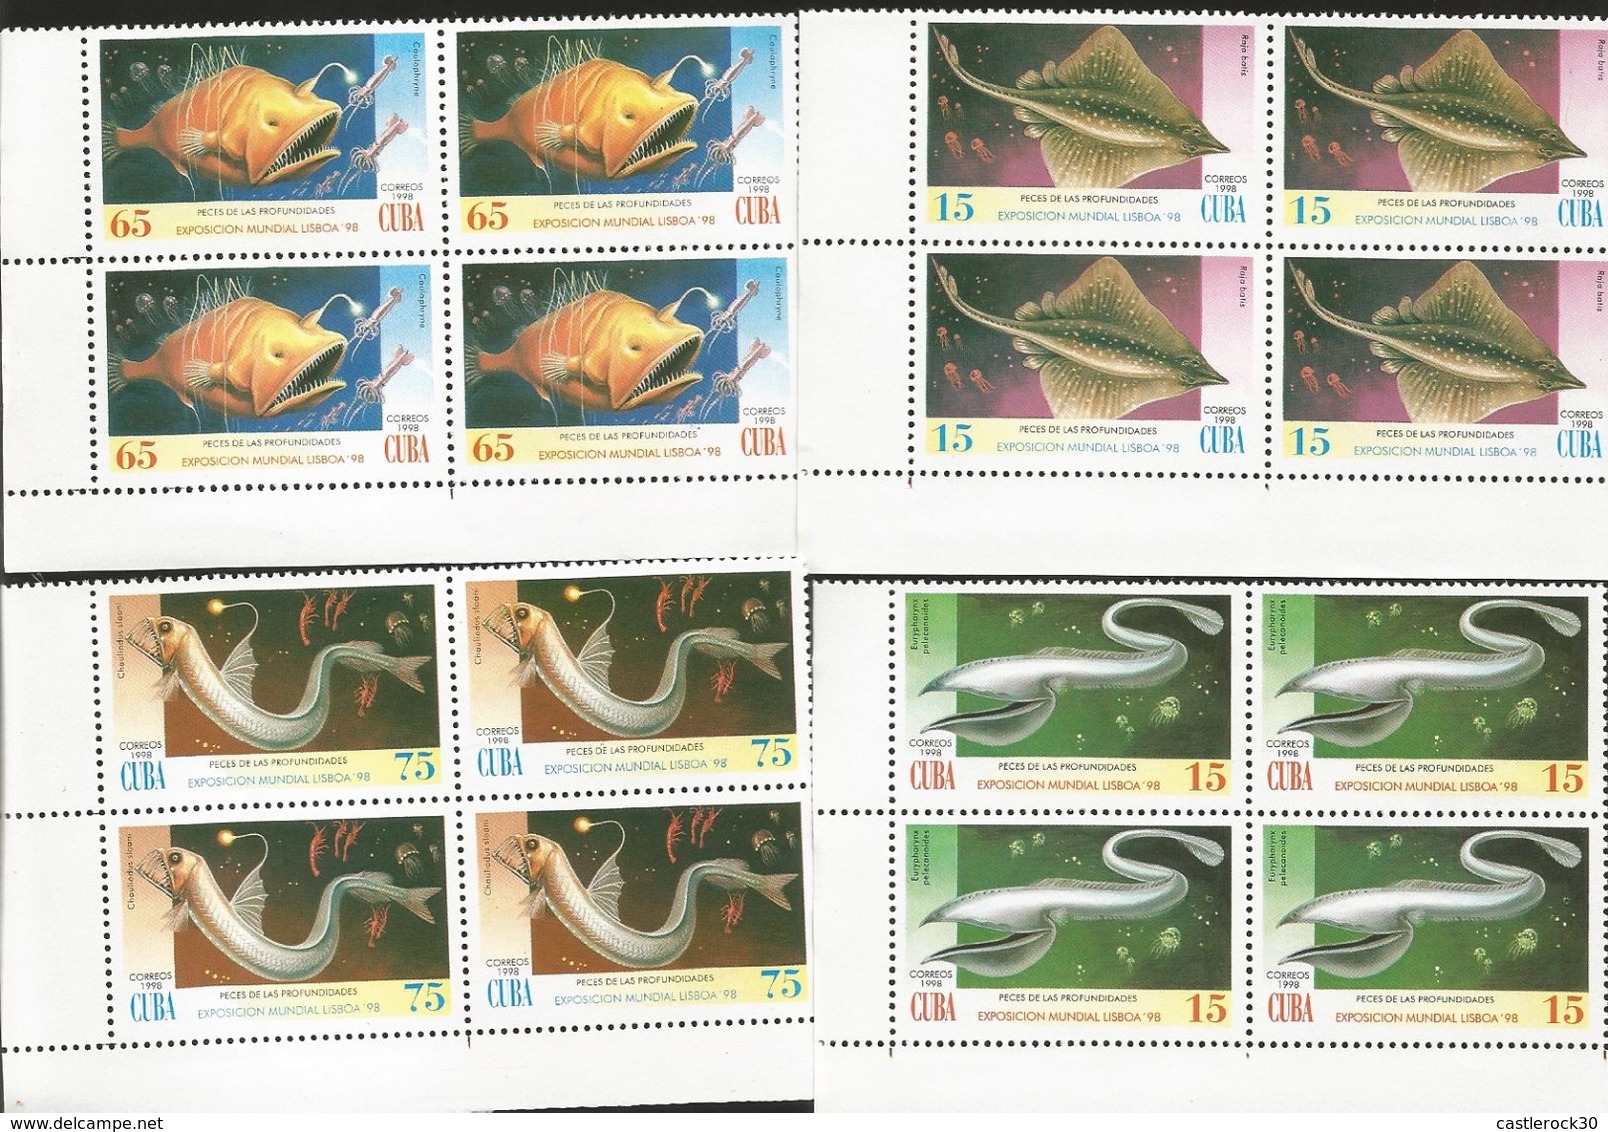 J) 1998 CUBA-CARIBE, WORLD LISBON EXHIBITION 98, FISH OF DEPTHS, SET OF 4 BLOCK OF 4 MNH - Briefe U. Dokumente